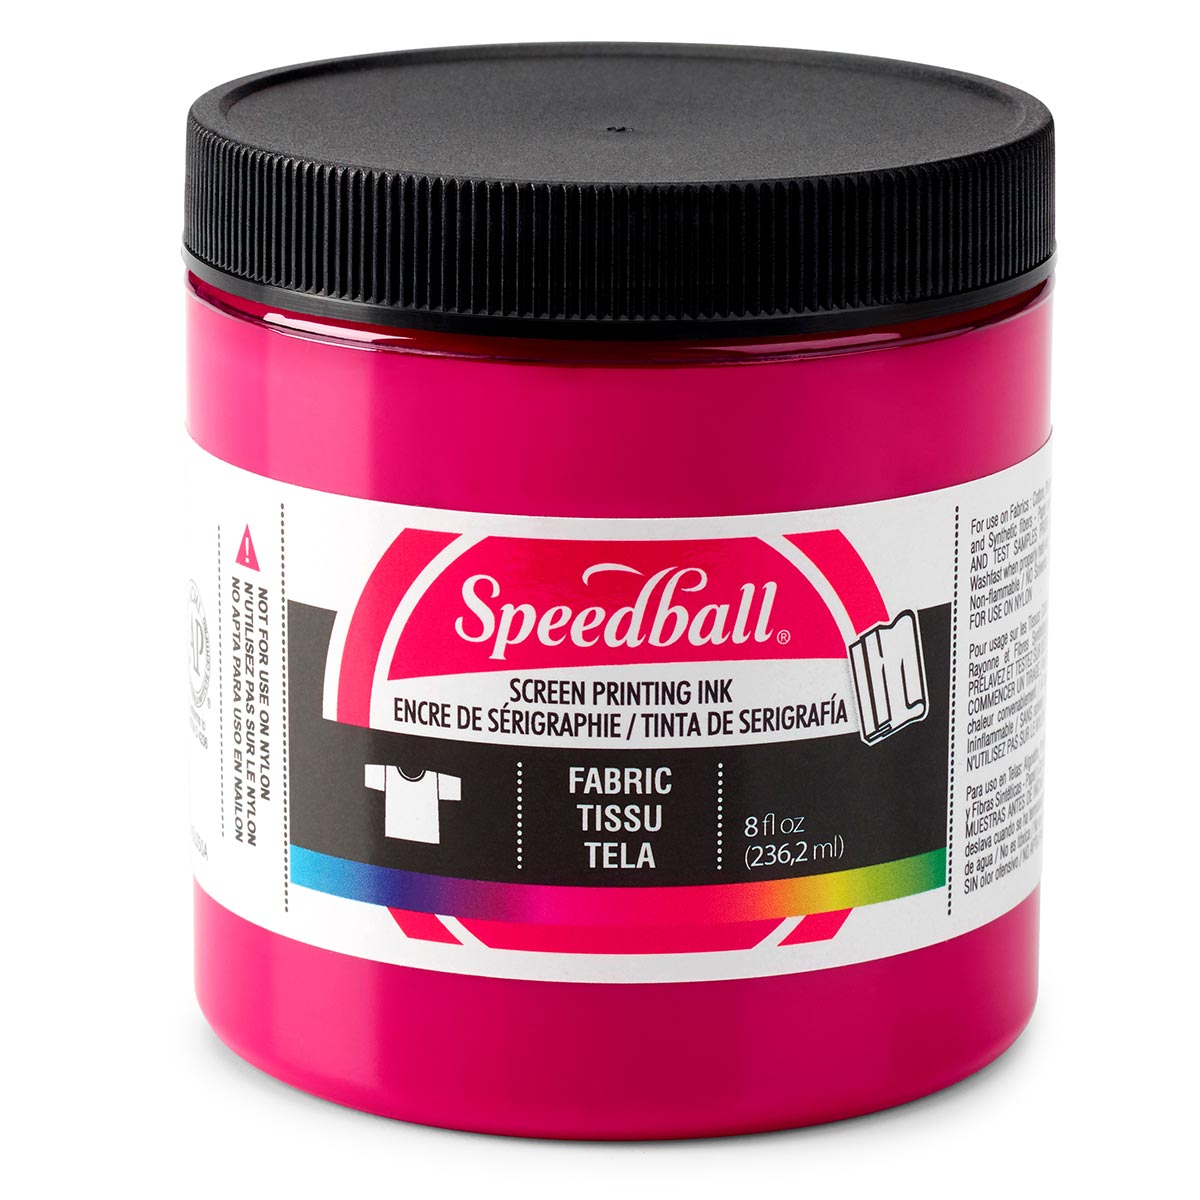 Speedball - Fabric Screen Printing Ink 236ml (8oz) - Process Magenta